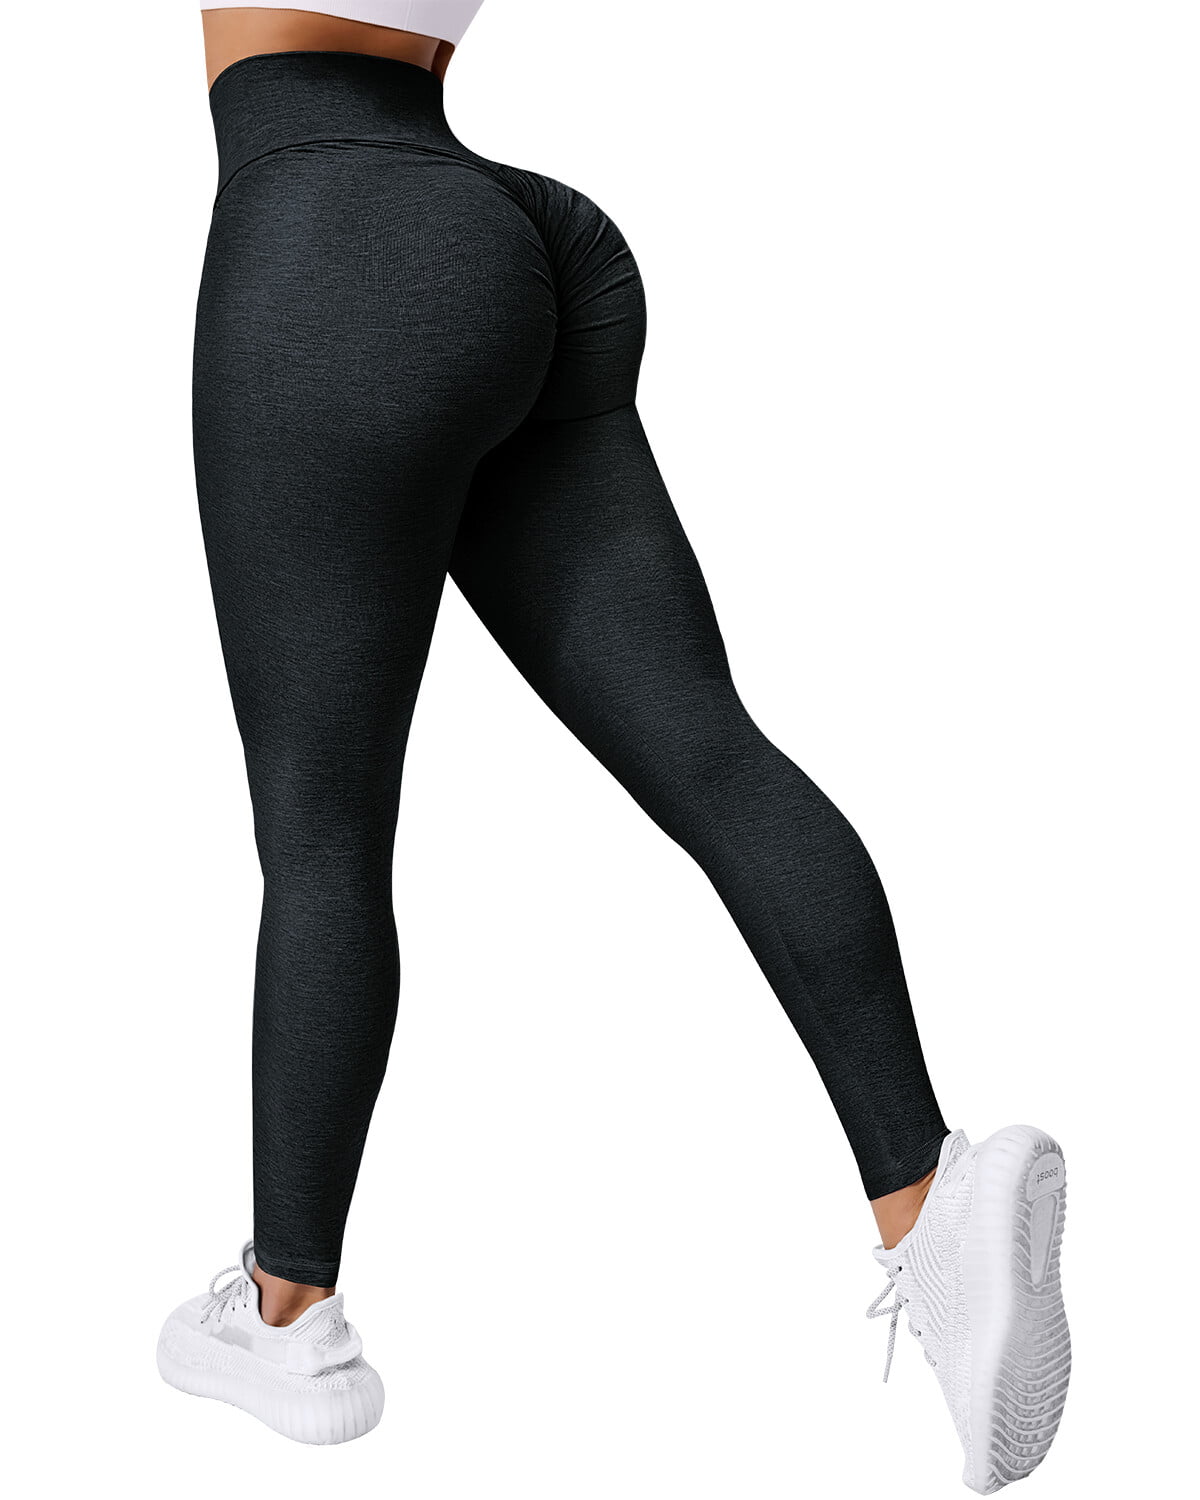 GetUSCart- Womens Leggings-High Waisted Black Leggings for Women-Premium  Jeggings for Workout, Yoga